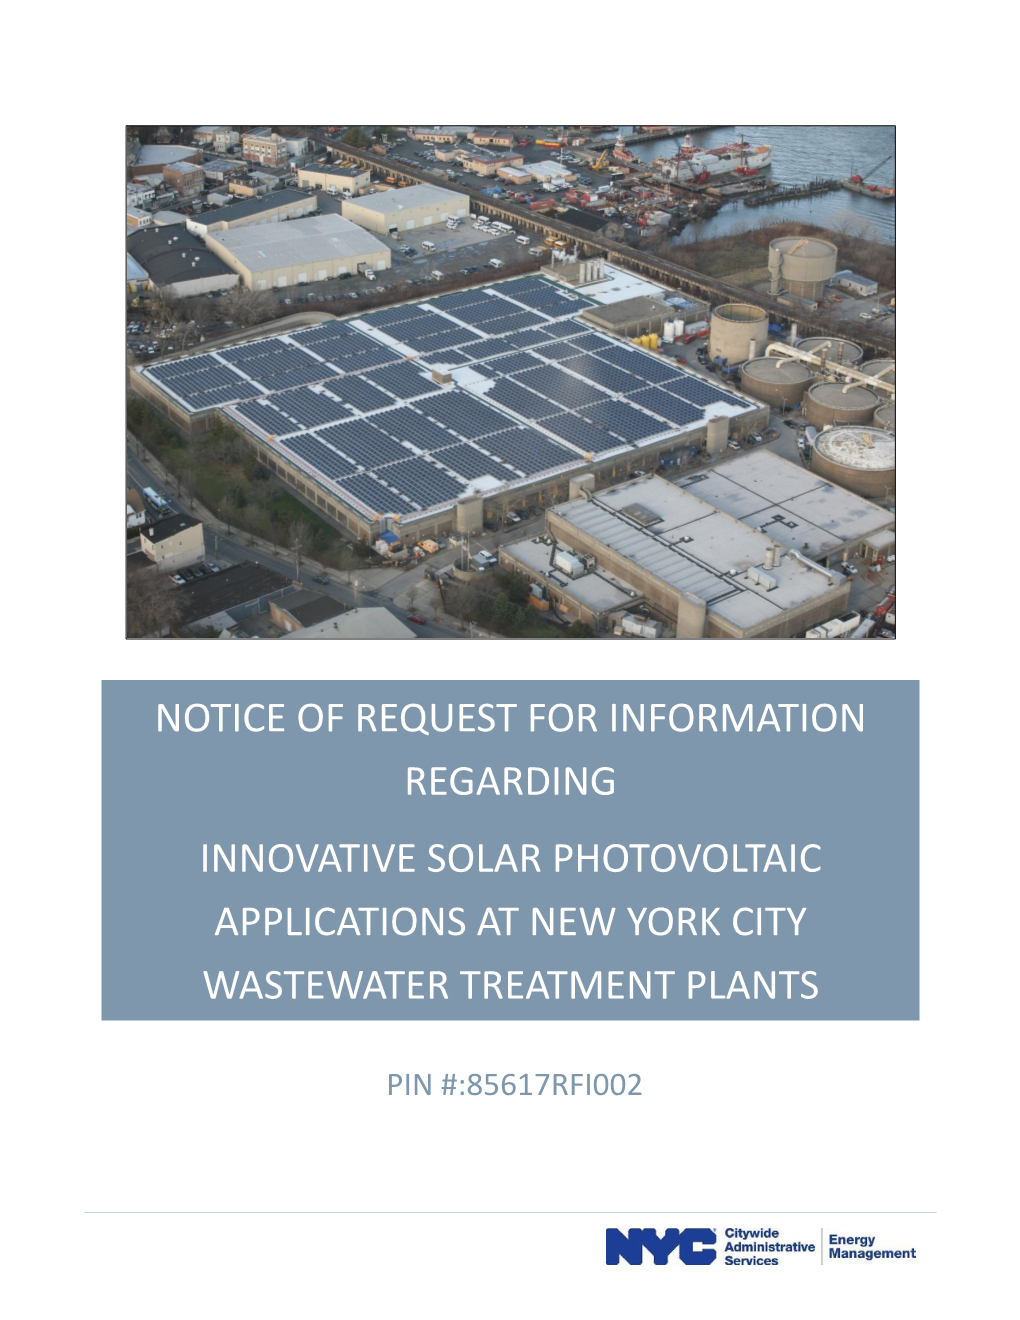 RFI for Innovative Solar PV